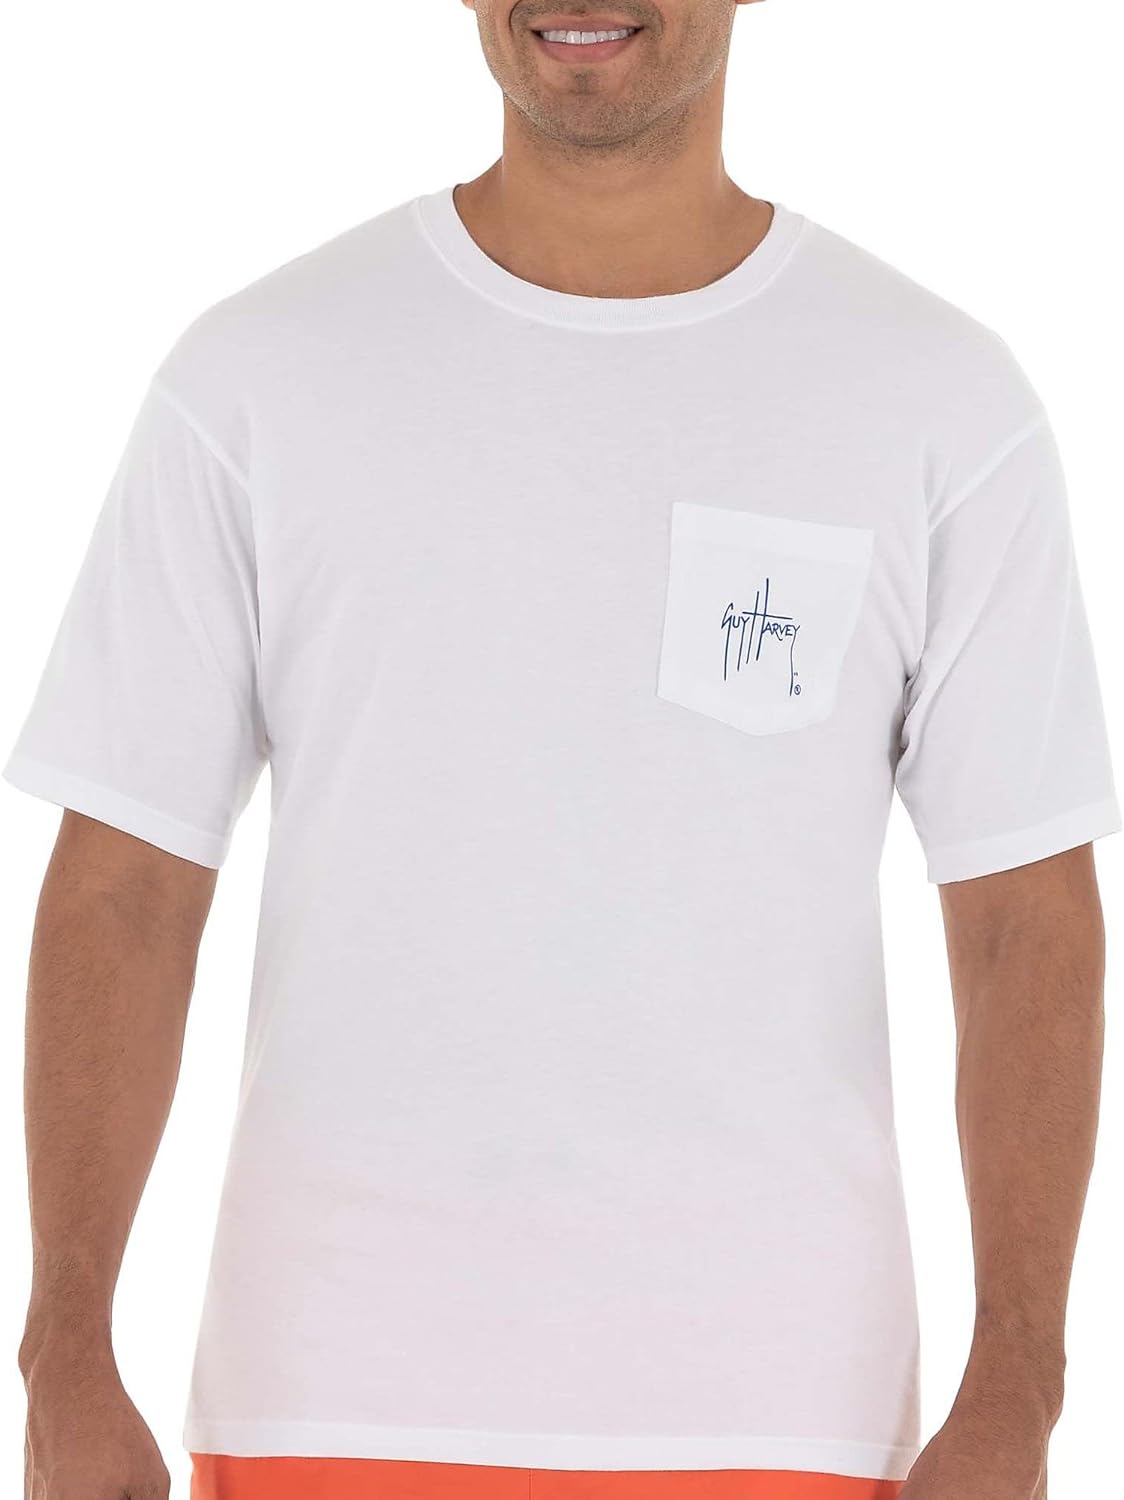 Men's Collection short sleeve pocket T-shirt - Walmart.com